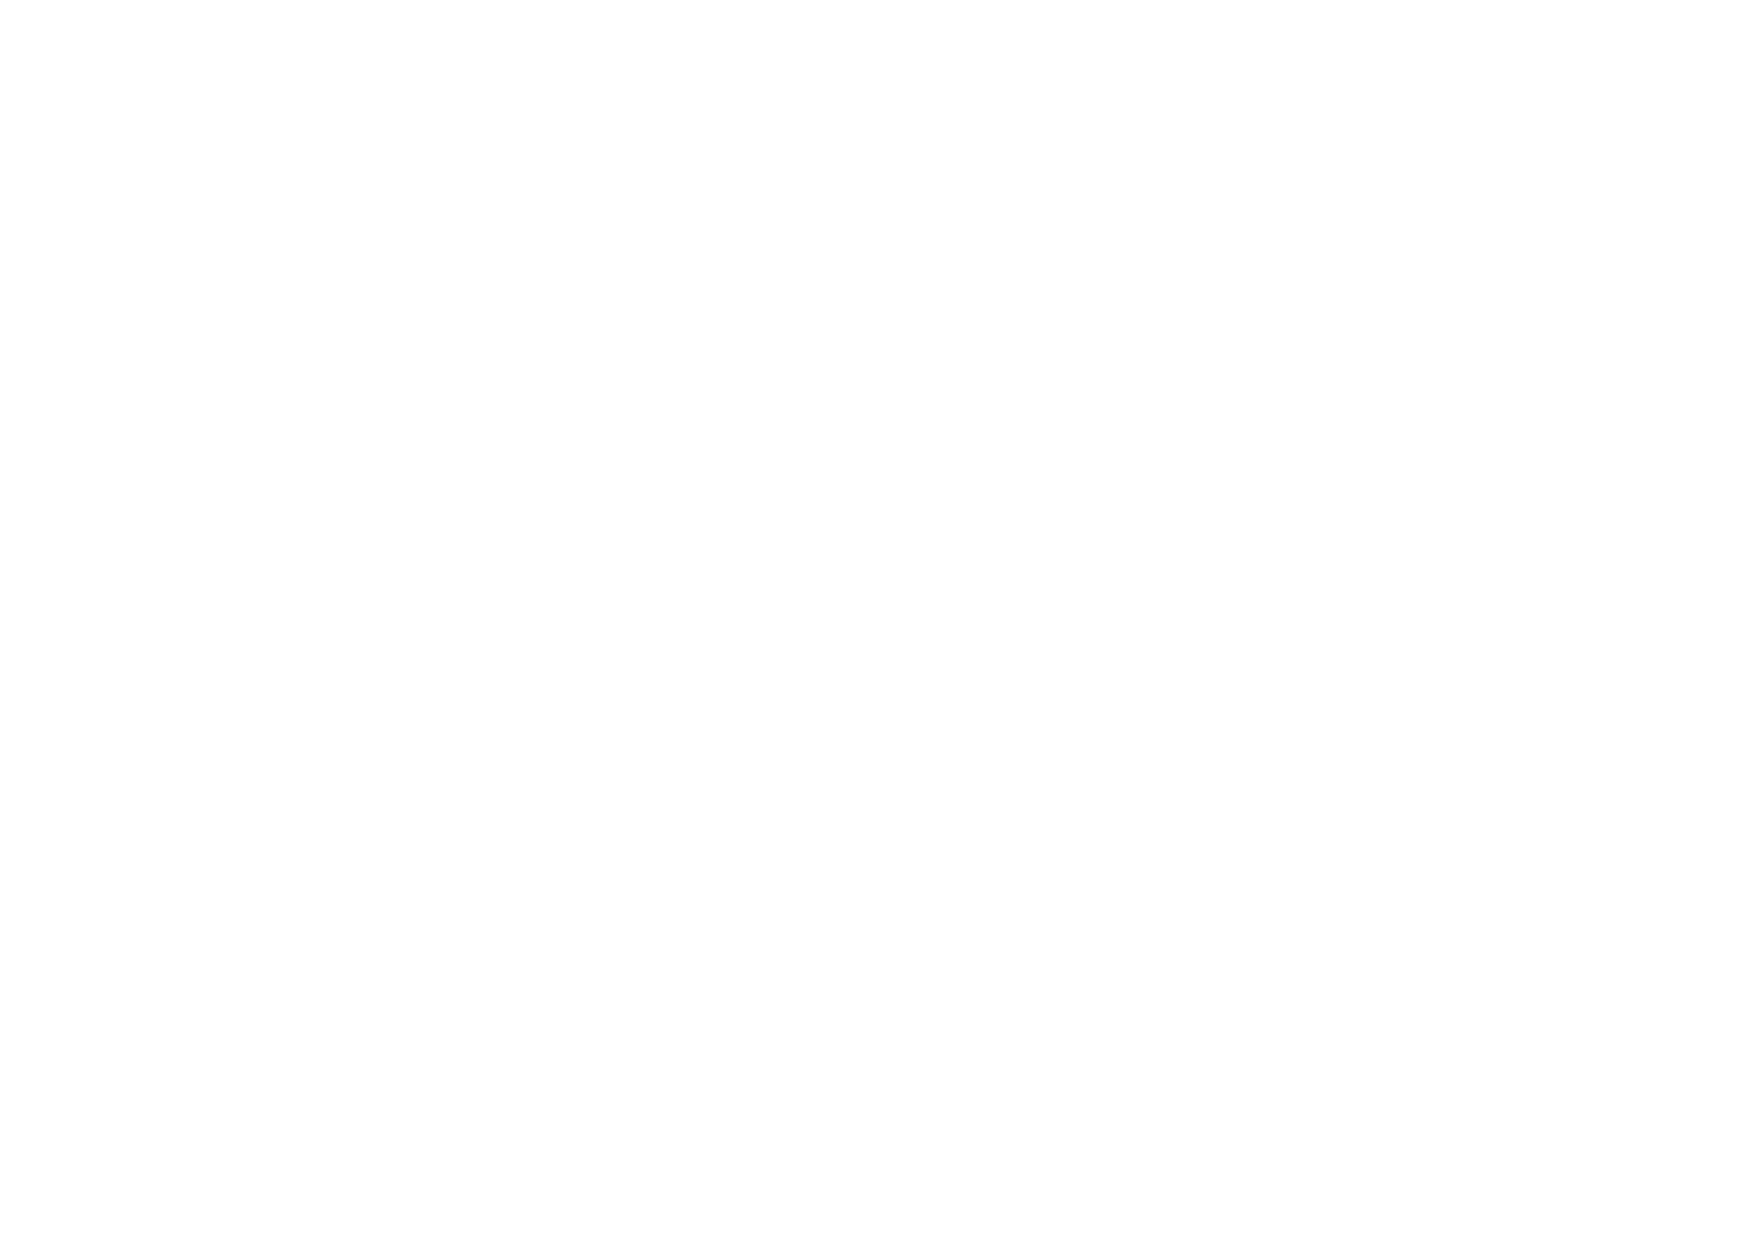 slowsand studio